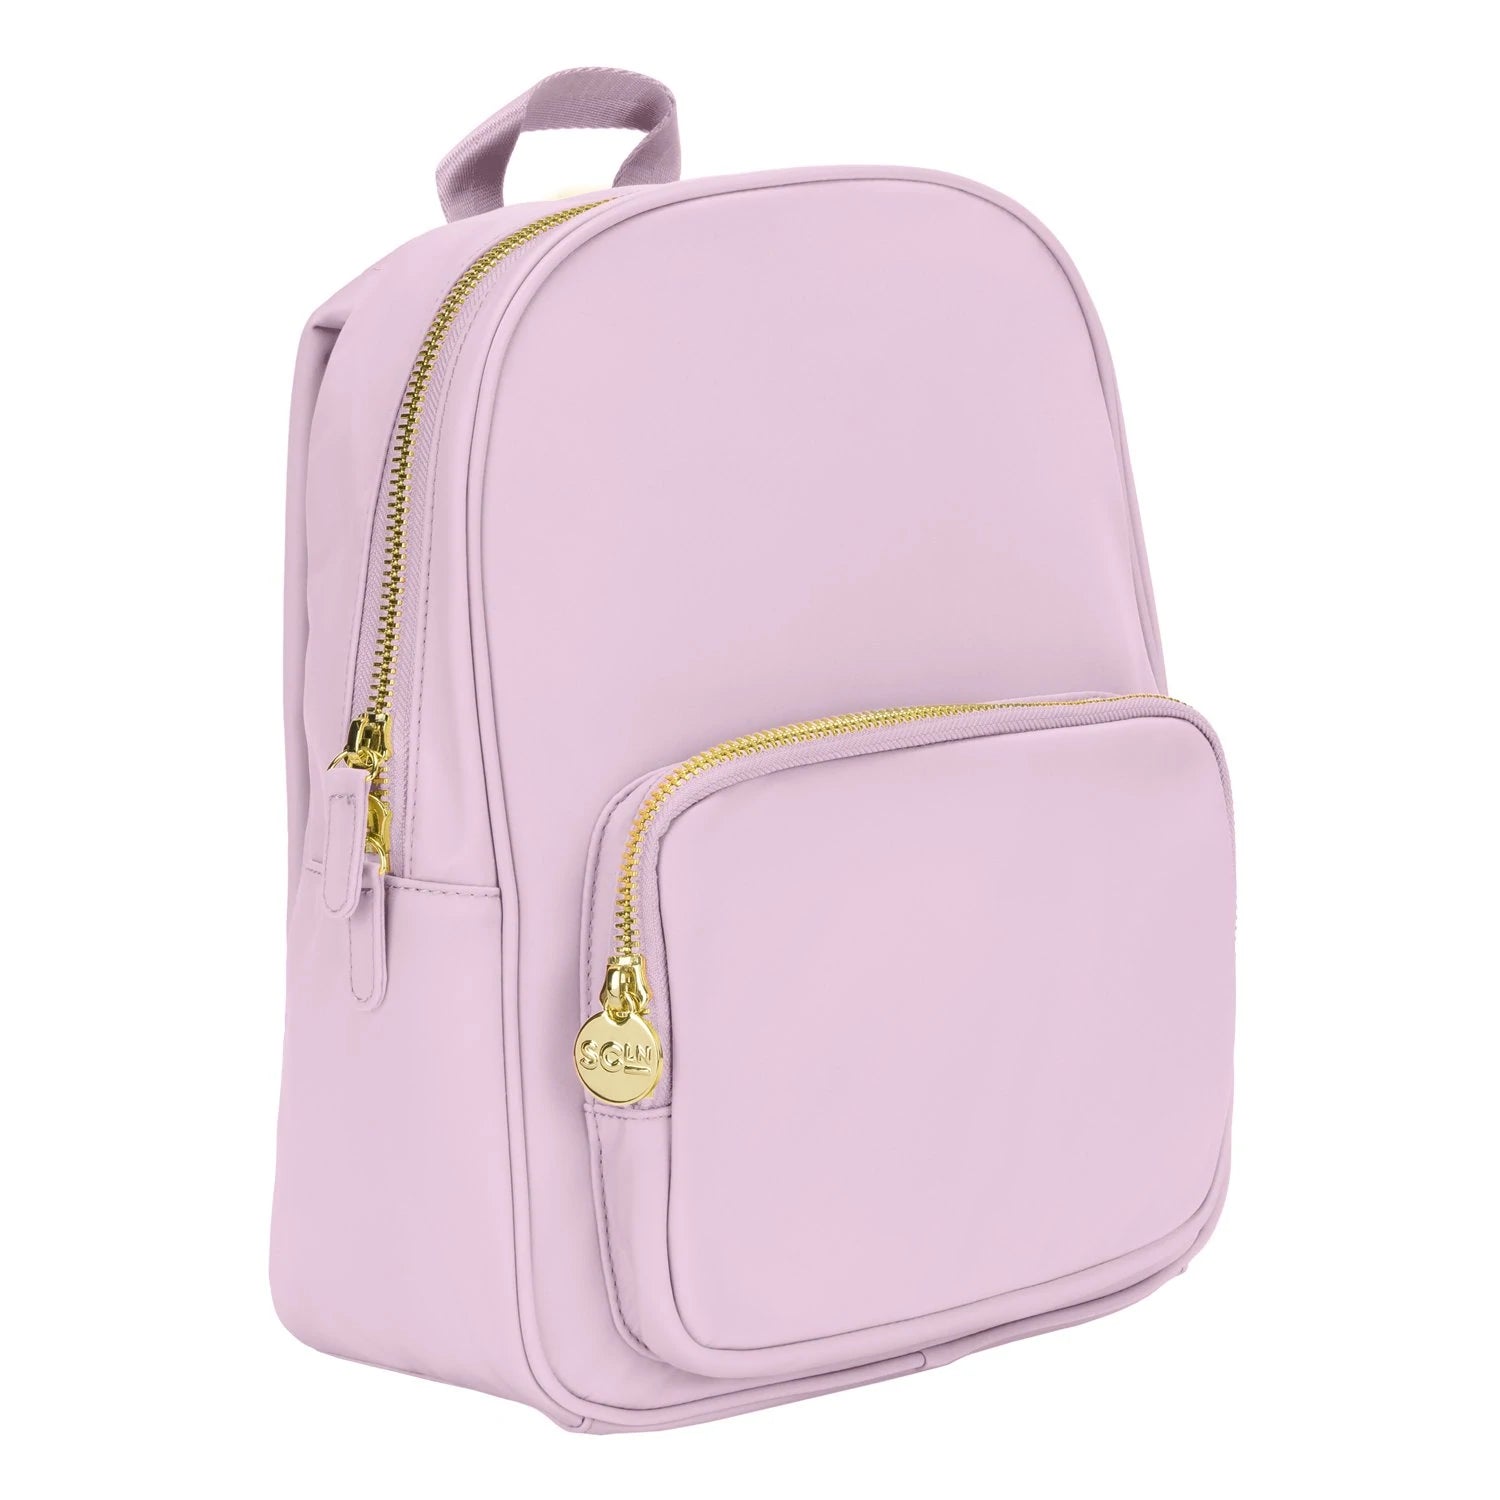 Adult Mini Backpack in Burgundy - Customizable | Stoney Clover Lane